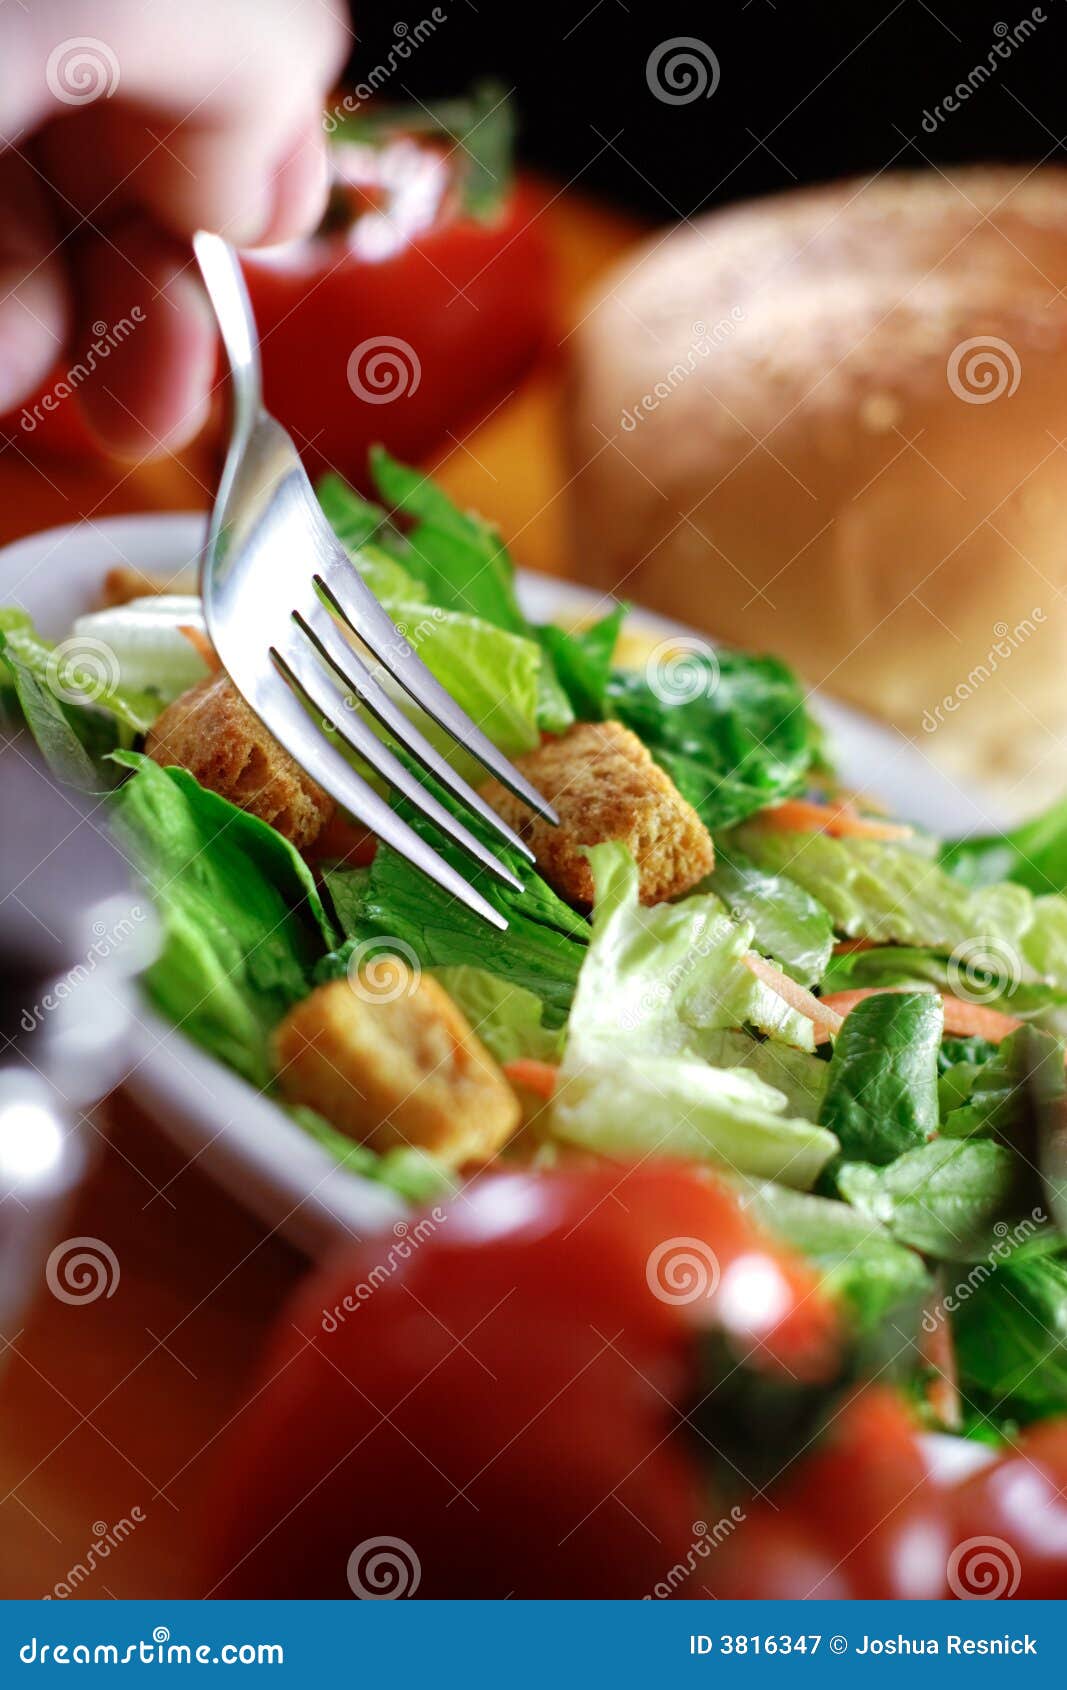 restaurant salad on wooden table.